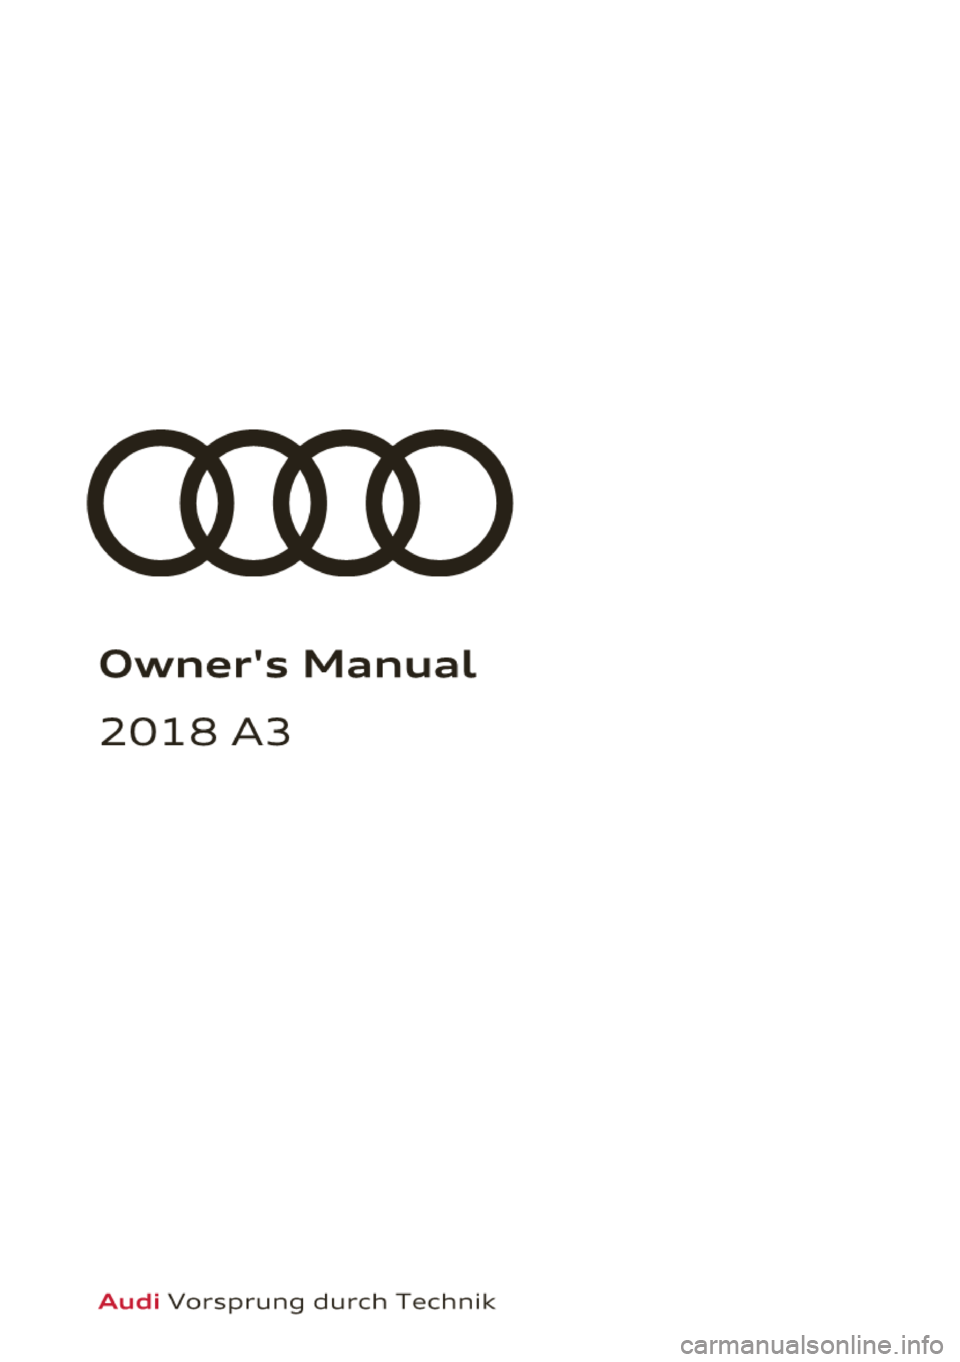 AUDI S3 SEDAN 2018  Owners Manual Owners  Manual 
2018  A3 
Audi Vorsprung  durch  T echnik  